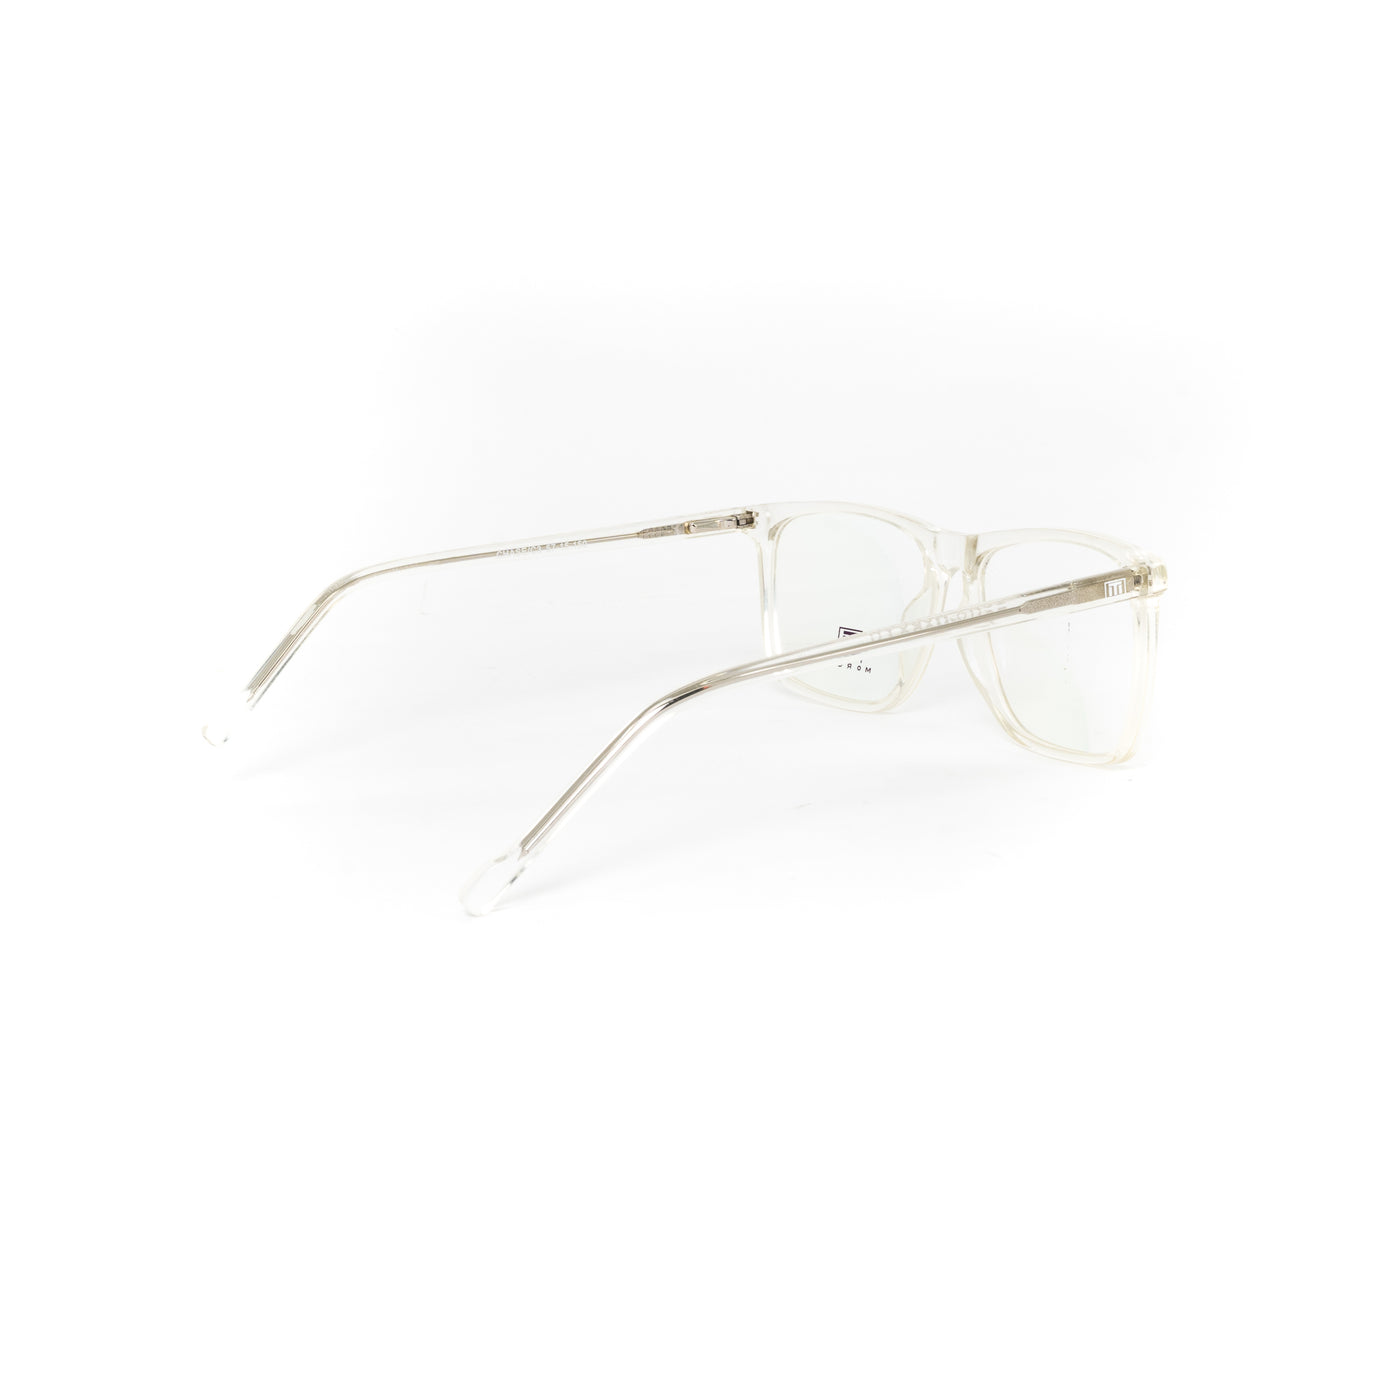 Tony Morgan London TM CHASE/C3 | Eyeglasses - Vision Express Optical Philippines